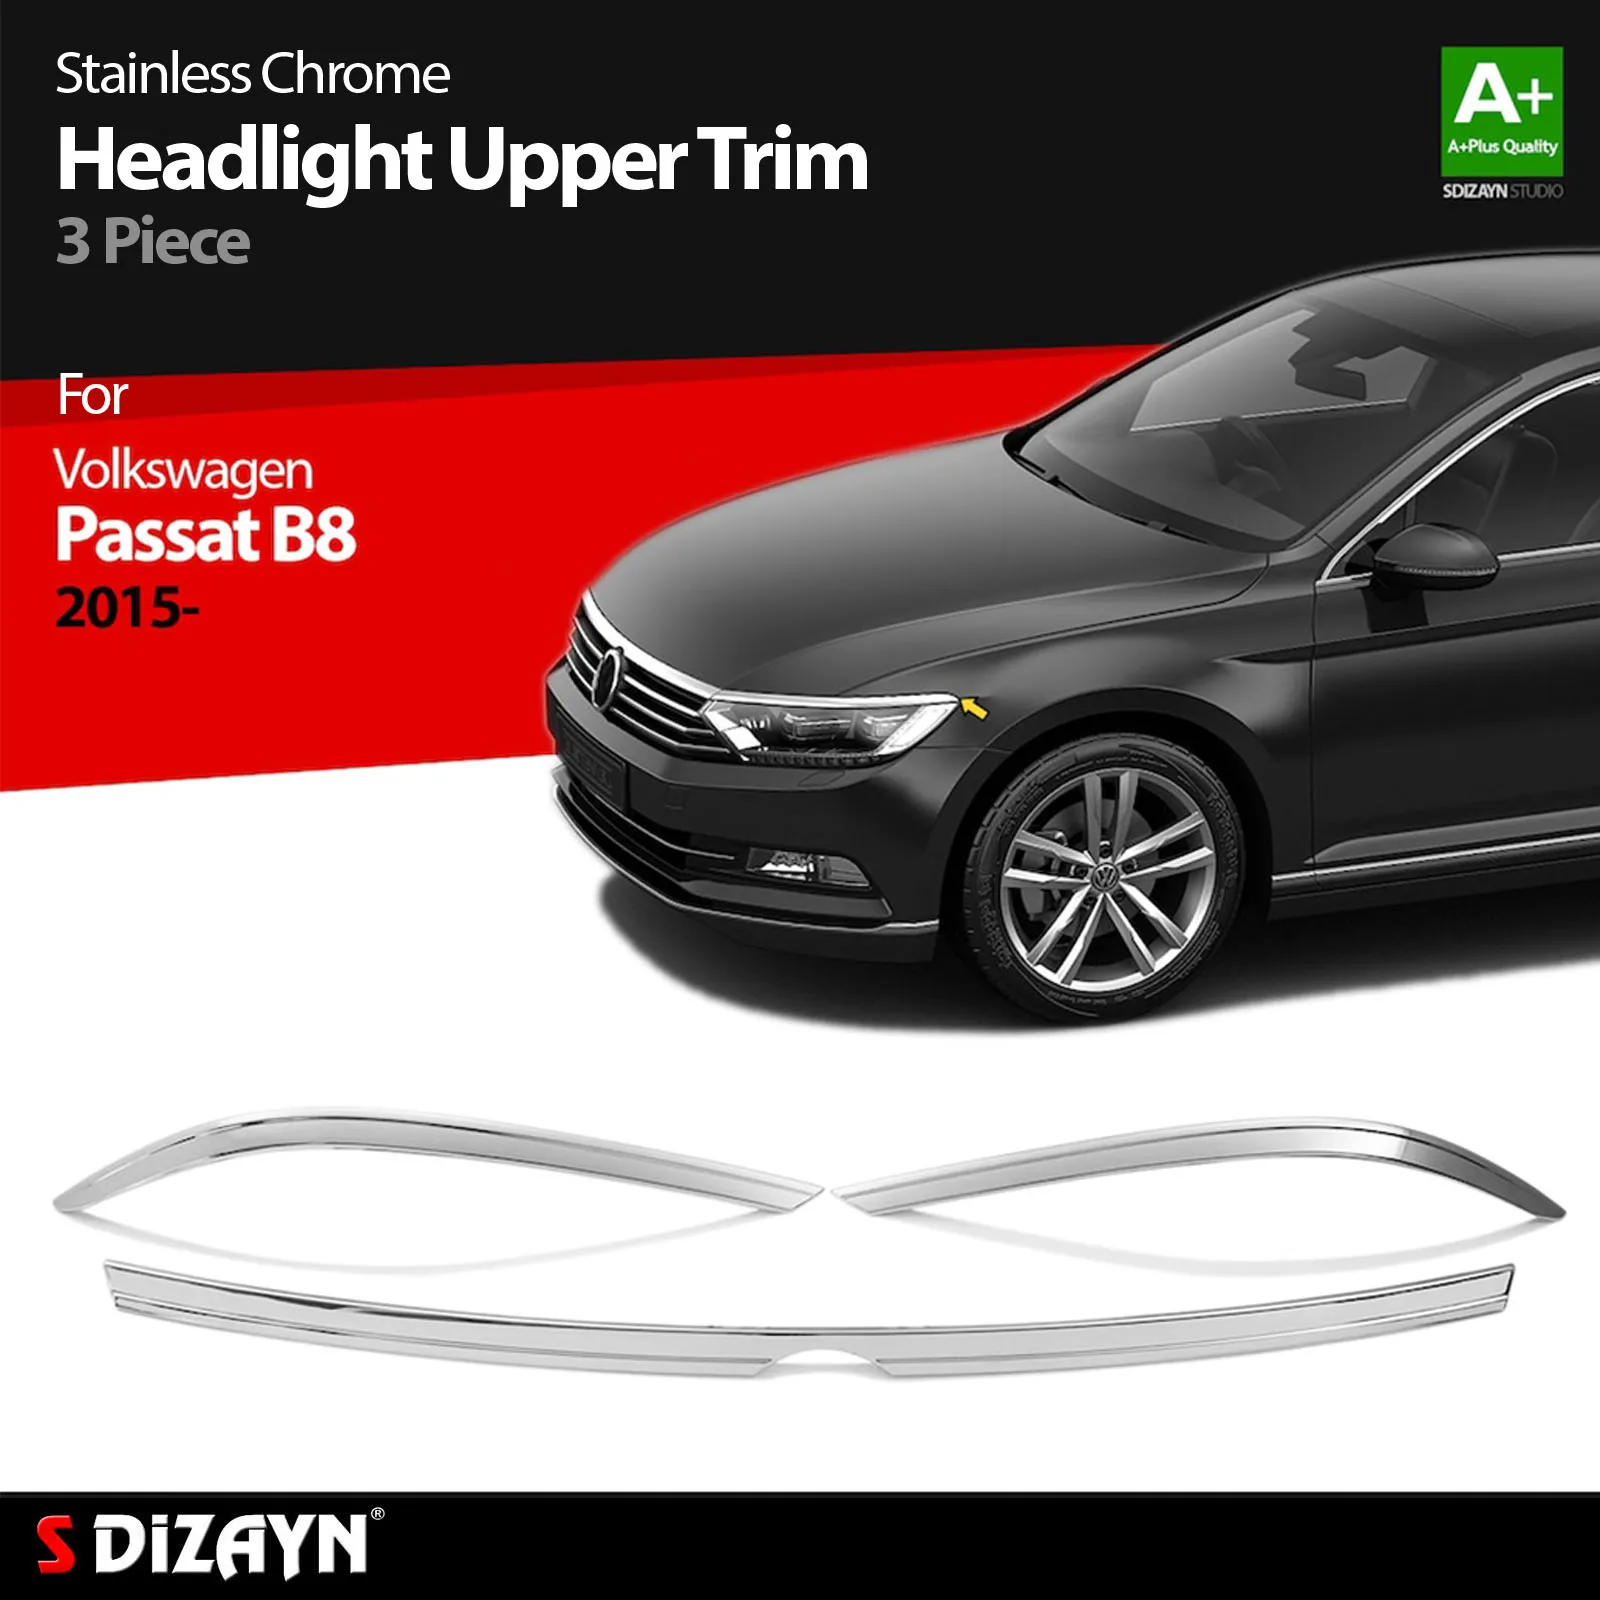 

S Dizayn For Volkswagen Passat B8 Chrome Headlight Trim Stainless Steel 3 Pcs VW Exterior Car Accessories Parts Auto Products